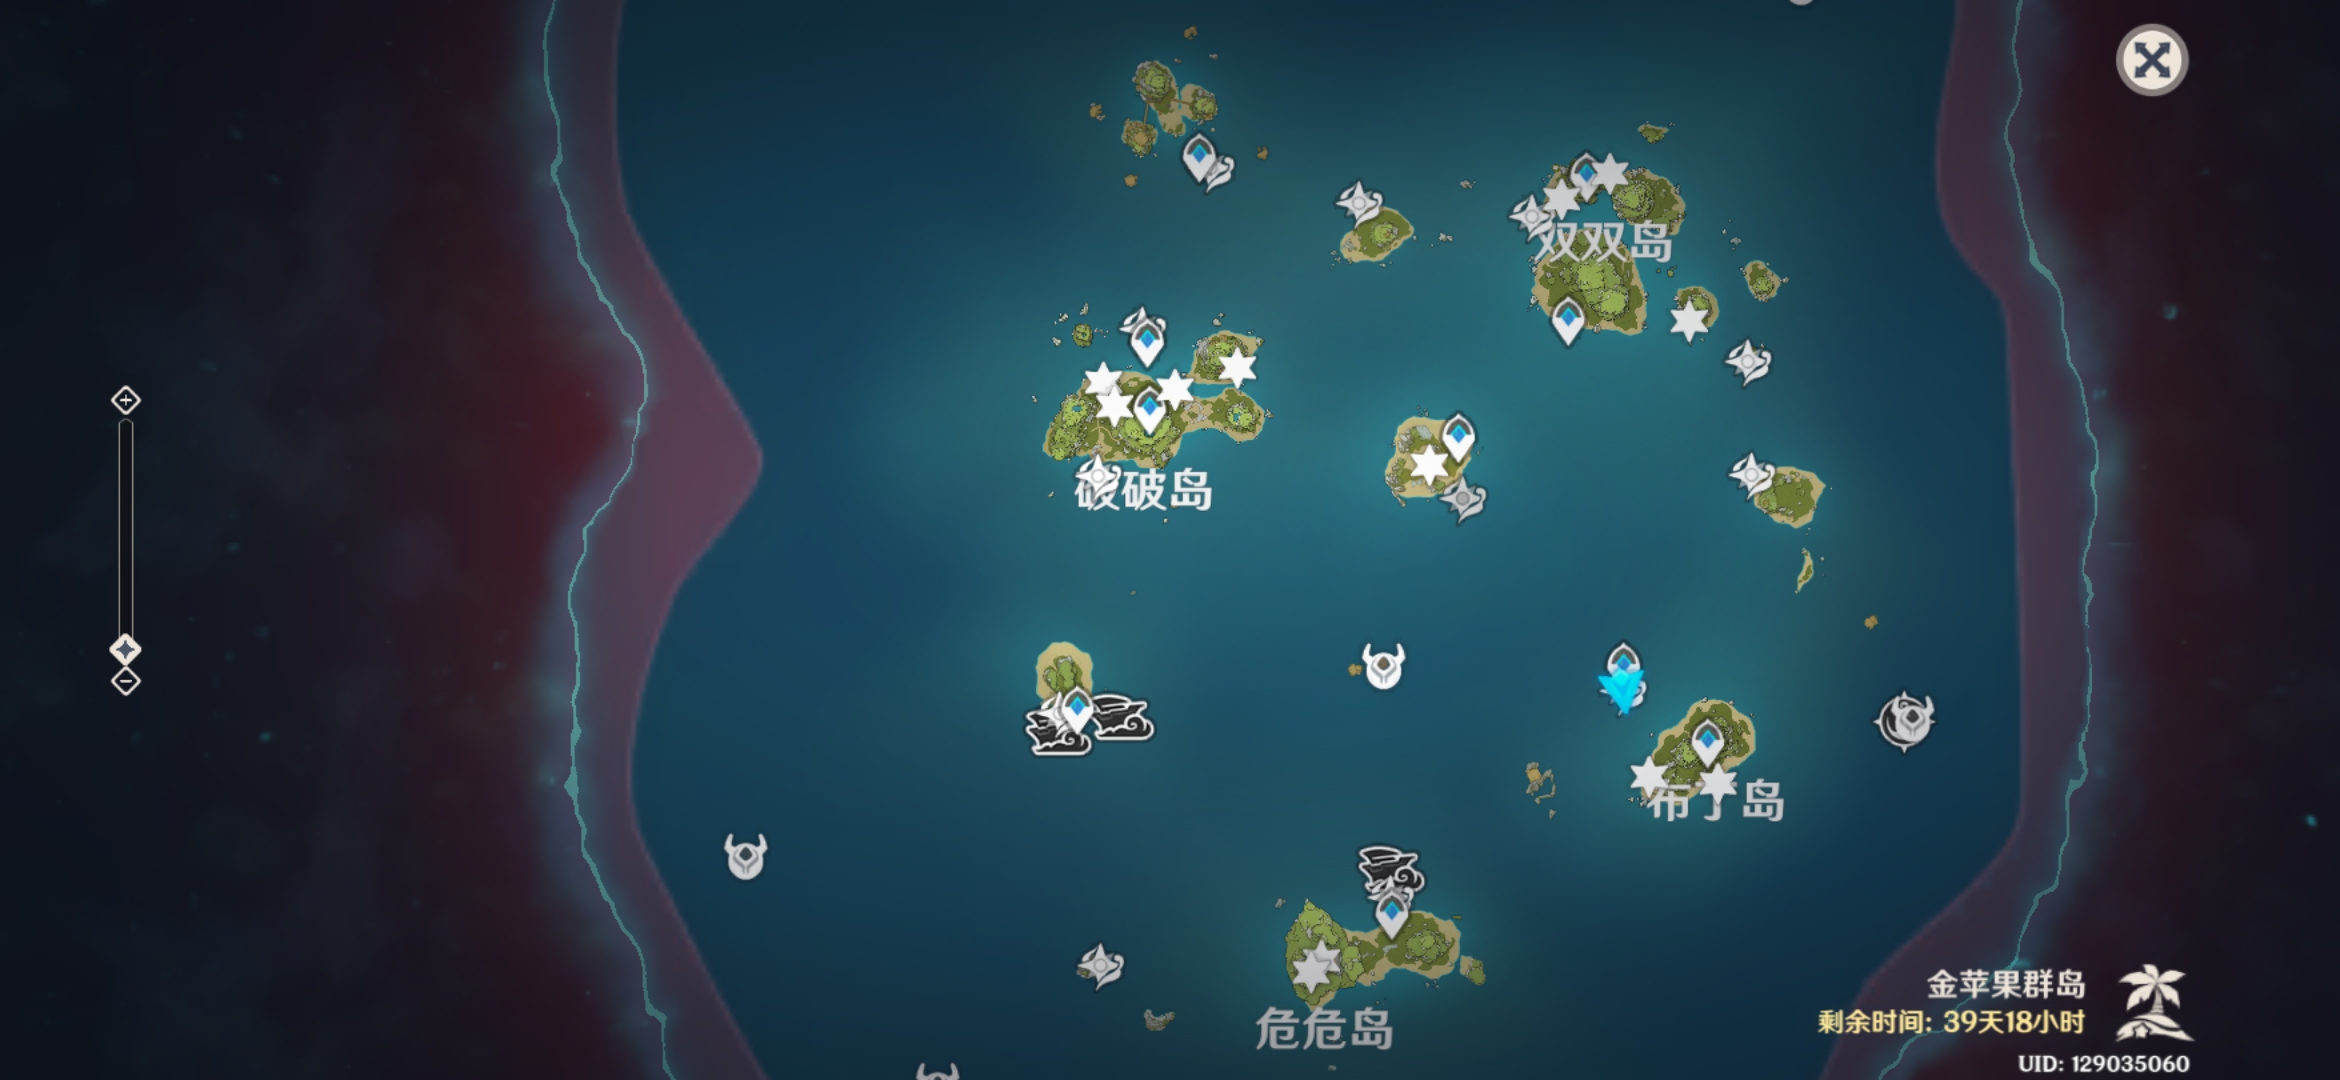 【V2.8攻略】#幻声留形#海岛图20个海螺具体位置|原神 - 第1张